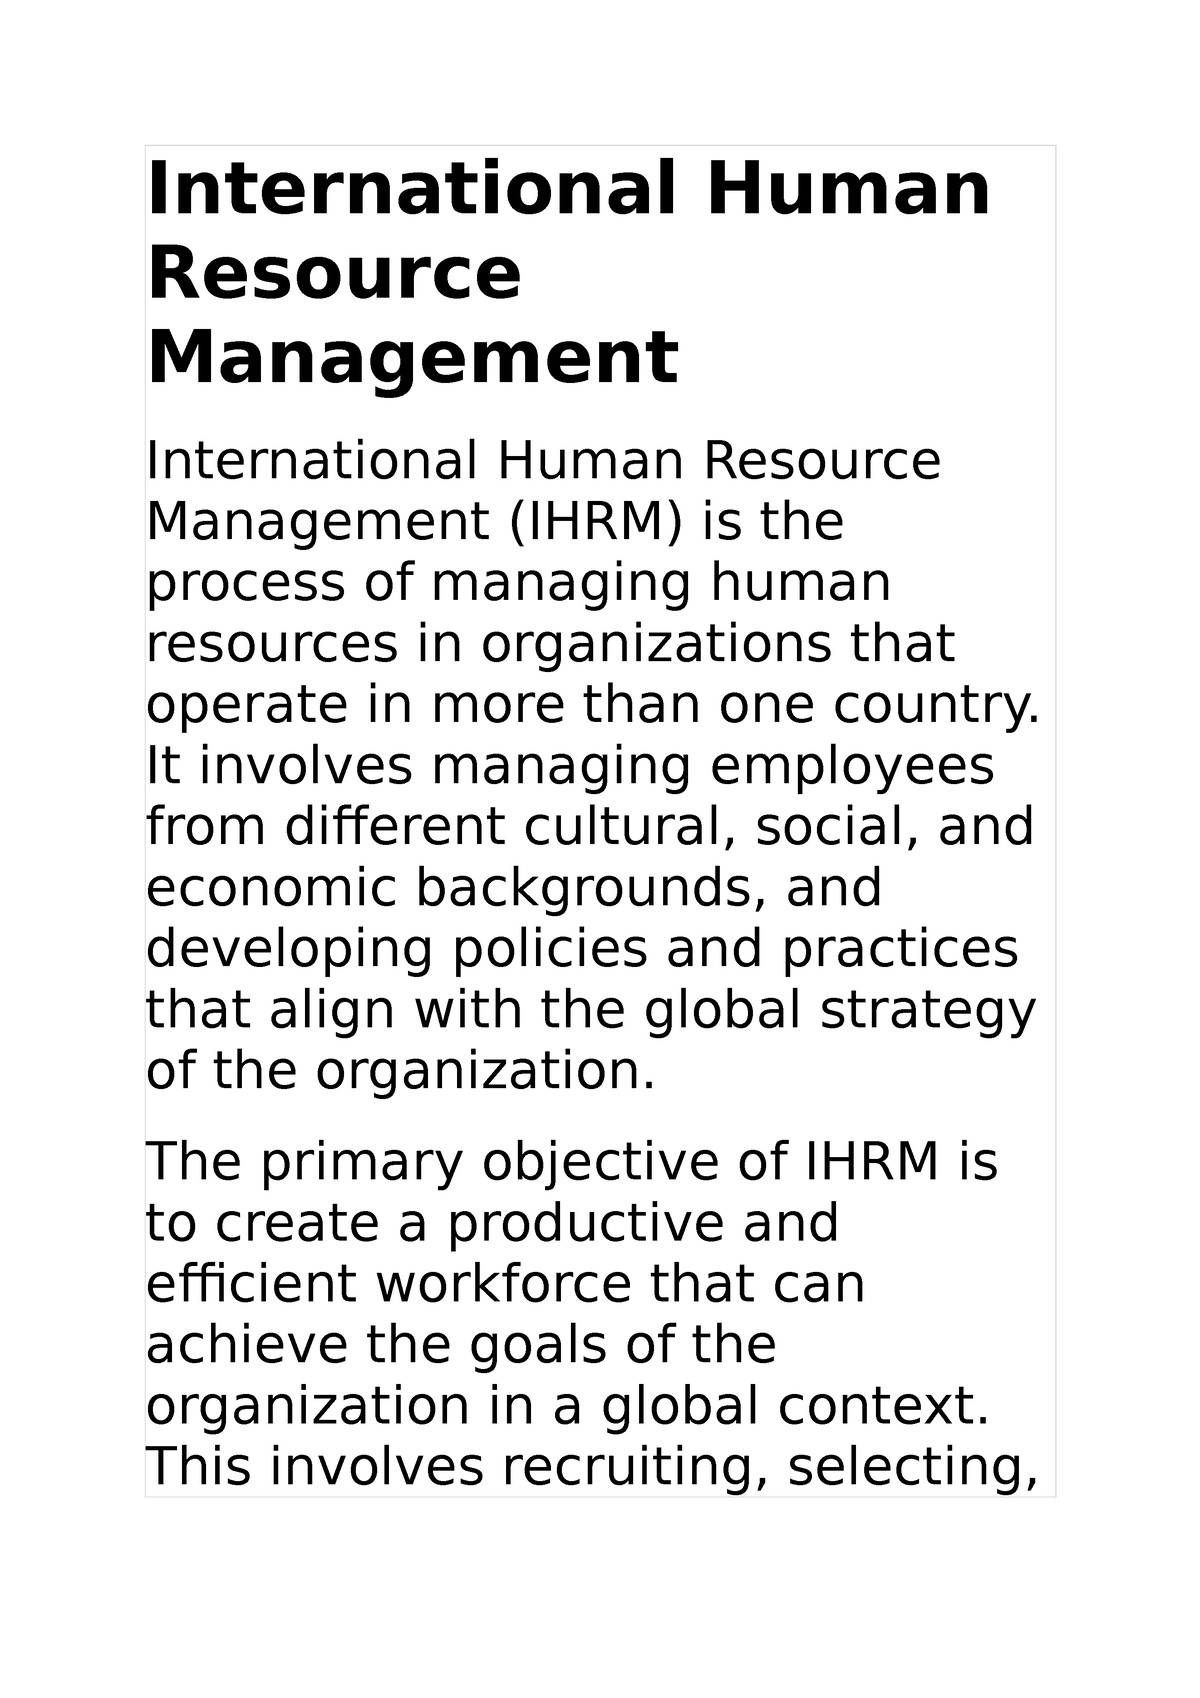 international human resource management case study